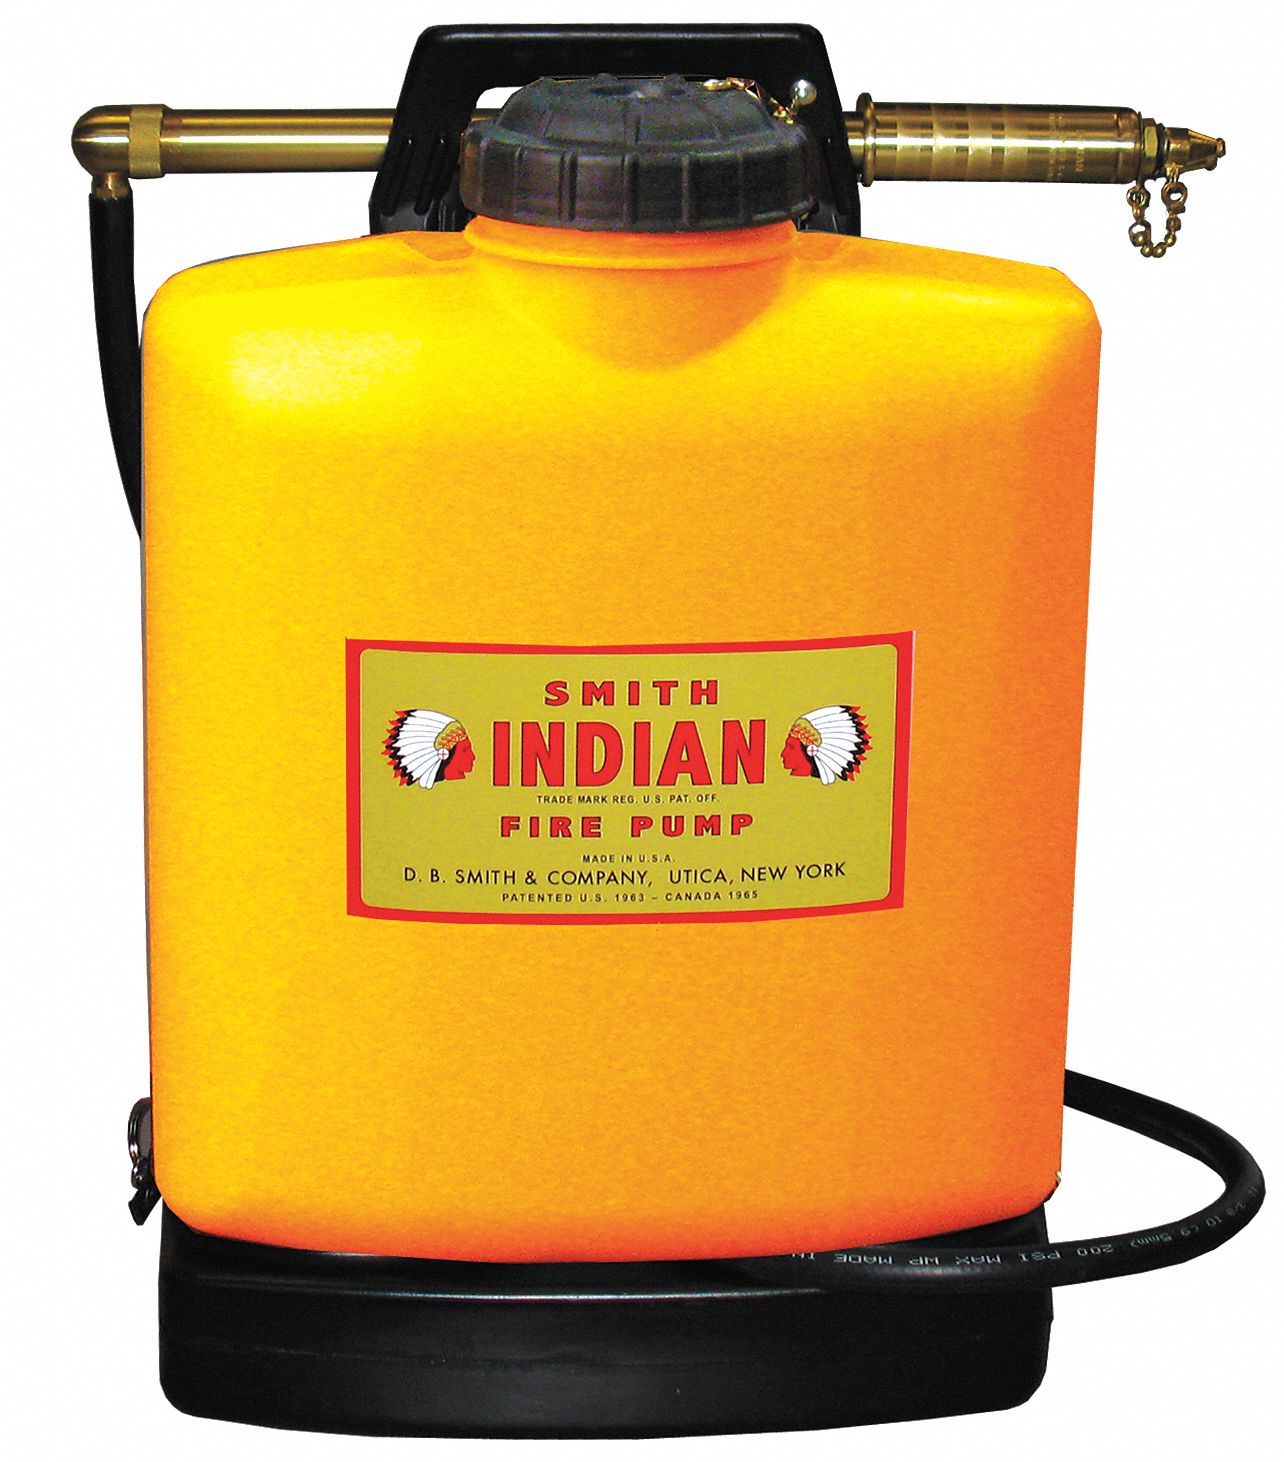 Wildland Firefighting Pump: Complete Wildland Pump, Carrying Tank, Plastic, Shoulder Straps